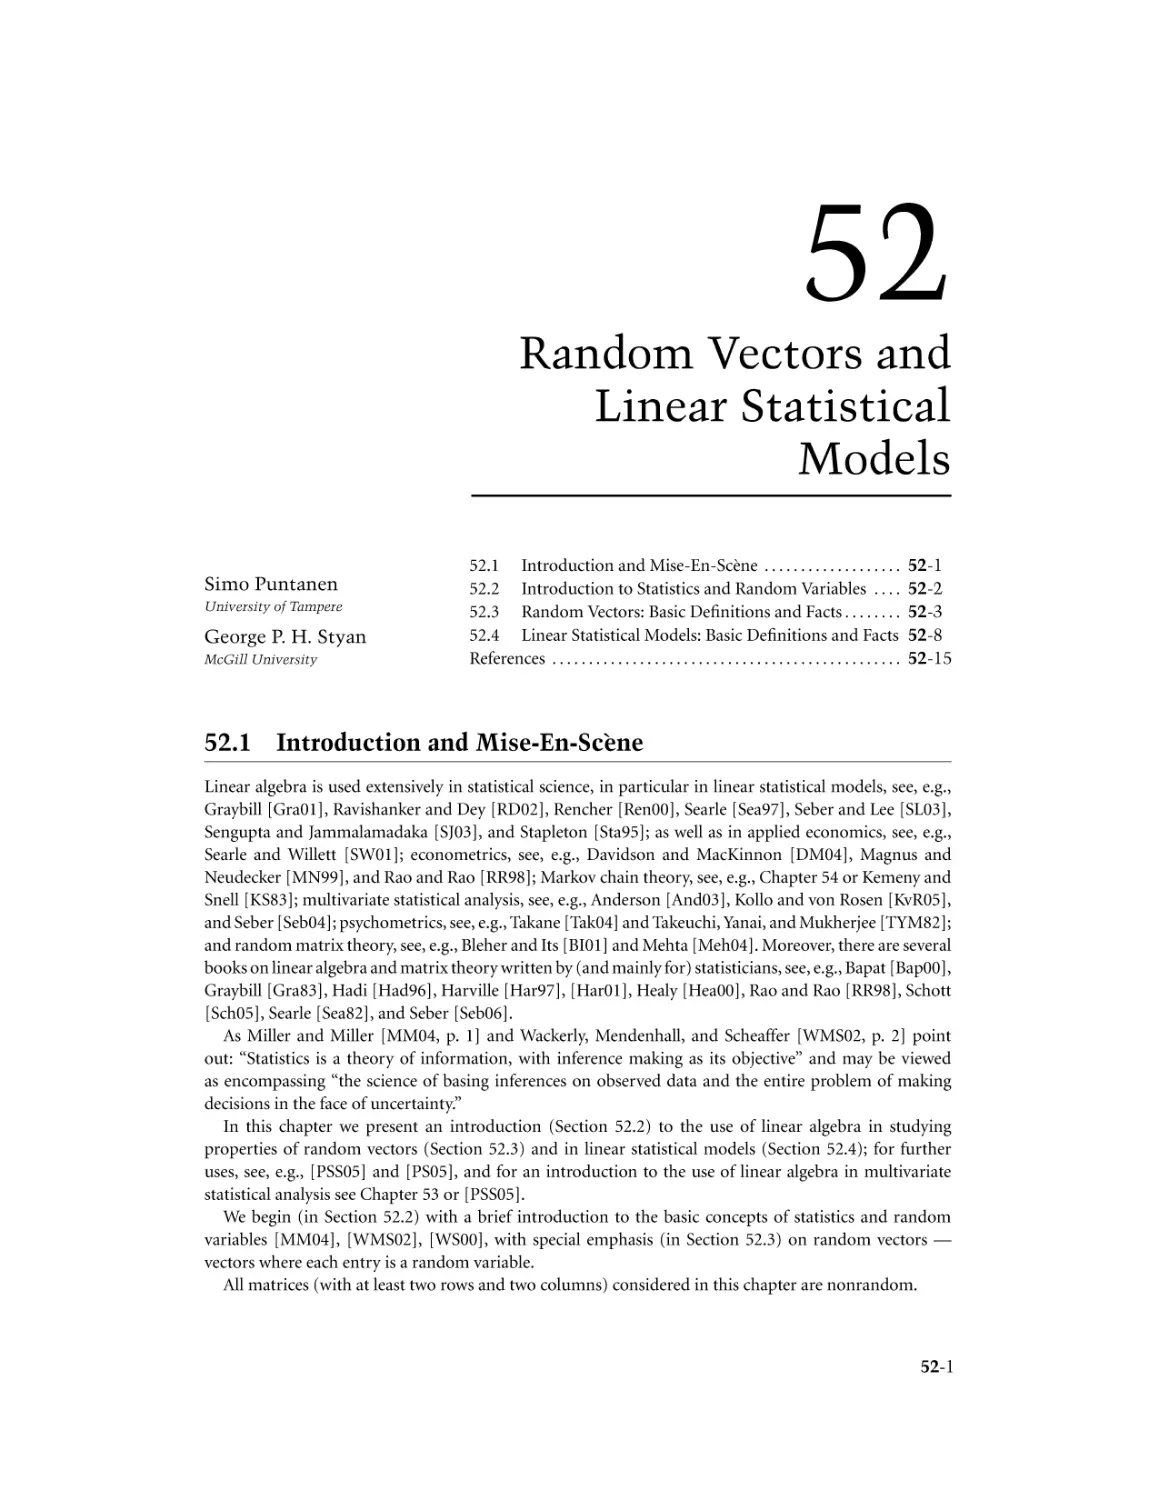 Chapter 52. Random Vectors and Linear Statistical Models